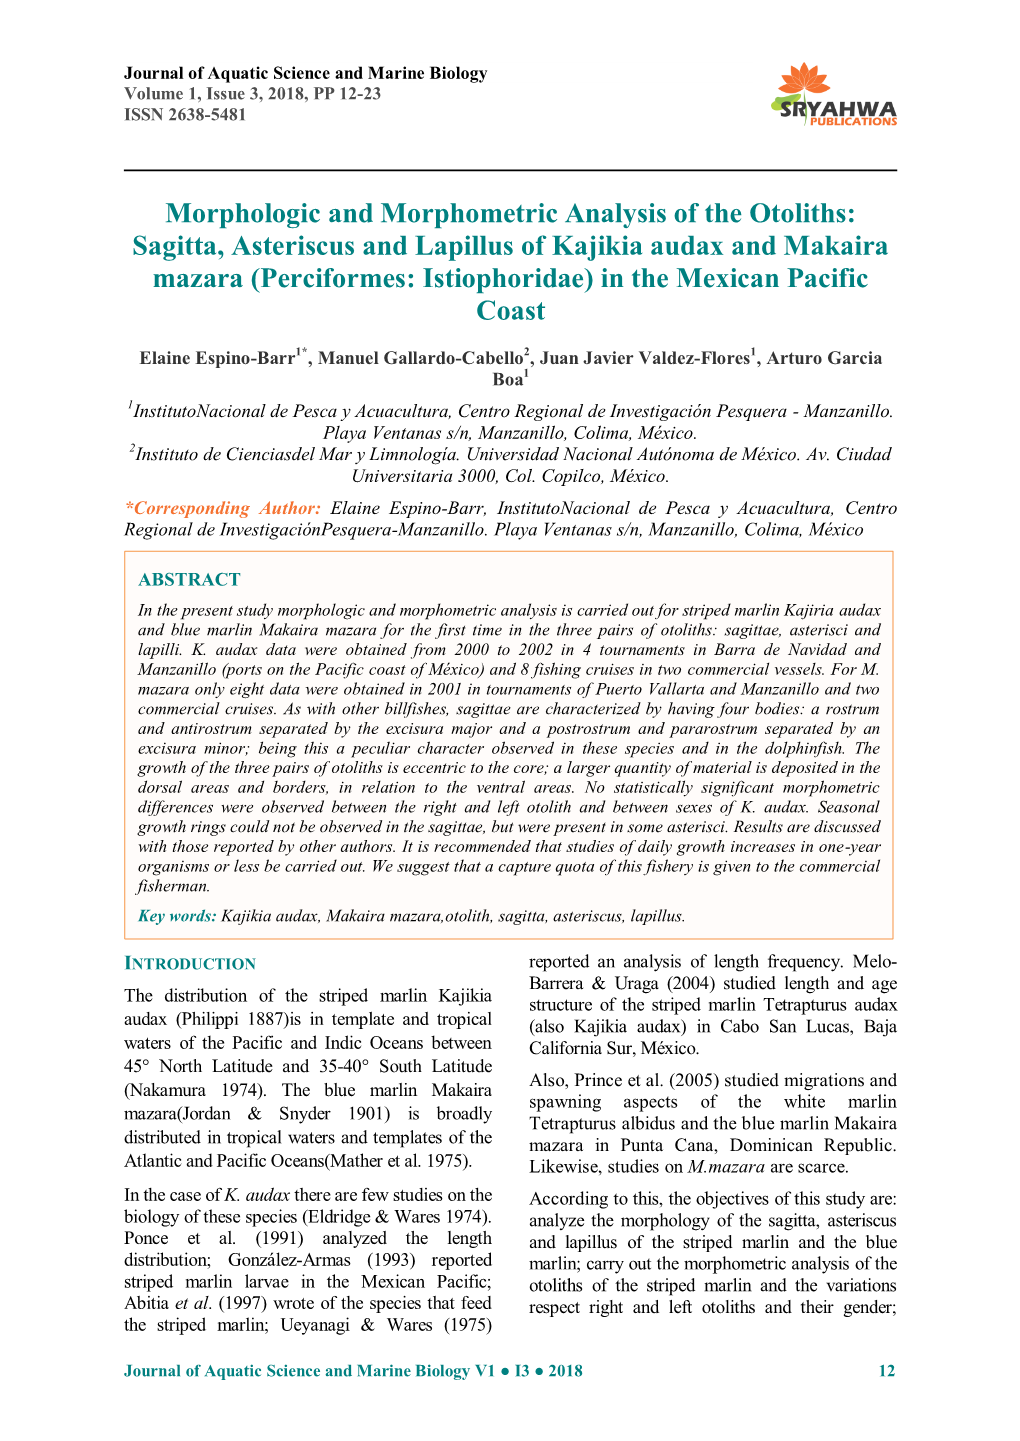 Morphologic and Morphometric Analysis of the Otoliths: Sagitta, Asteriscus and Lapillus of Kajikia Audax and Makaira Mazara (Per